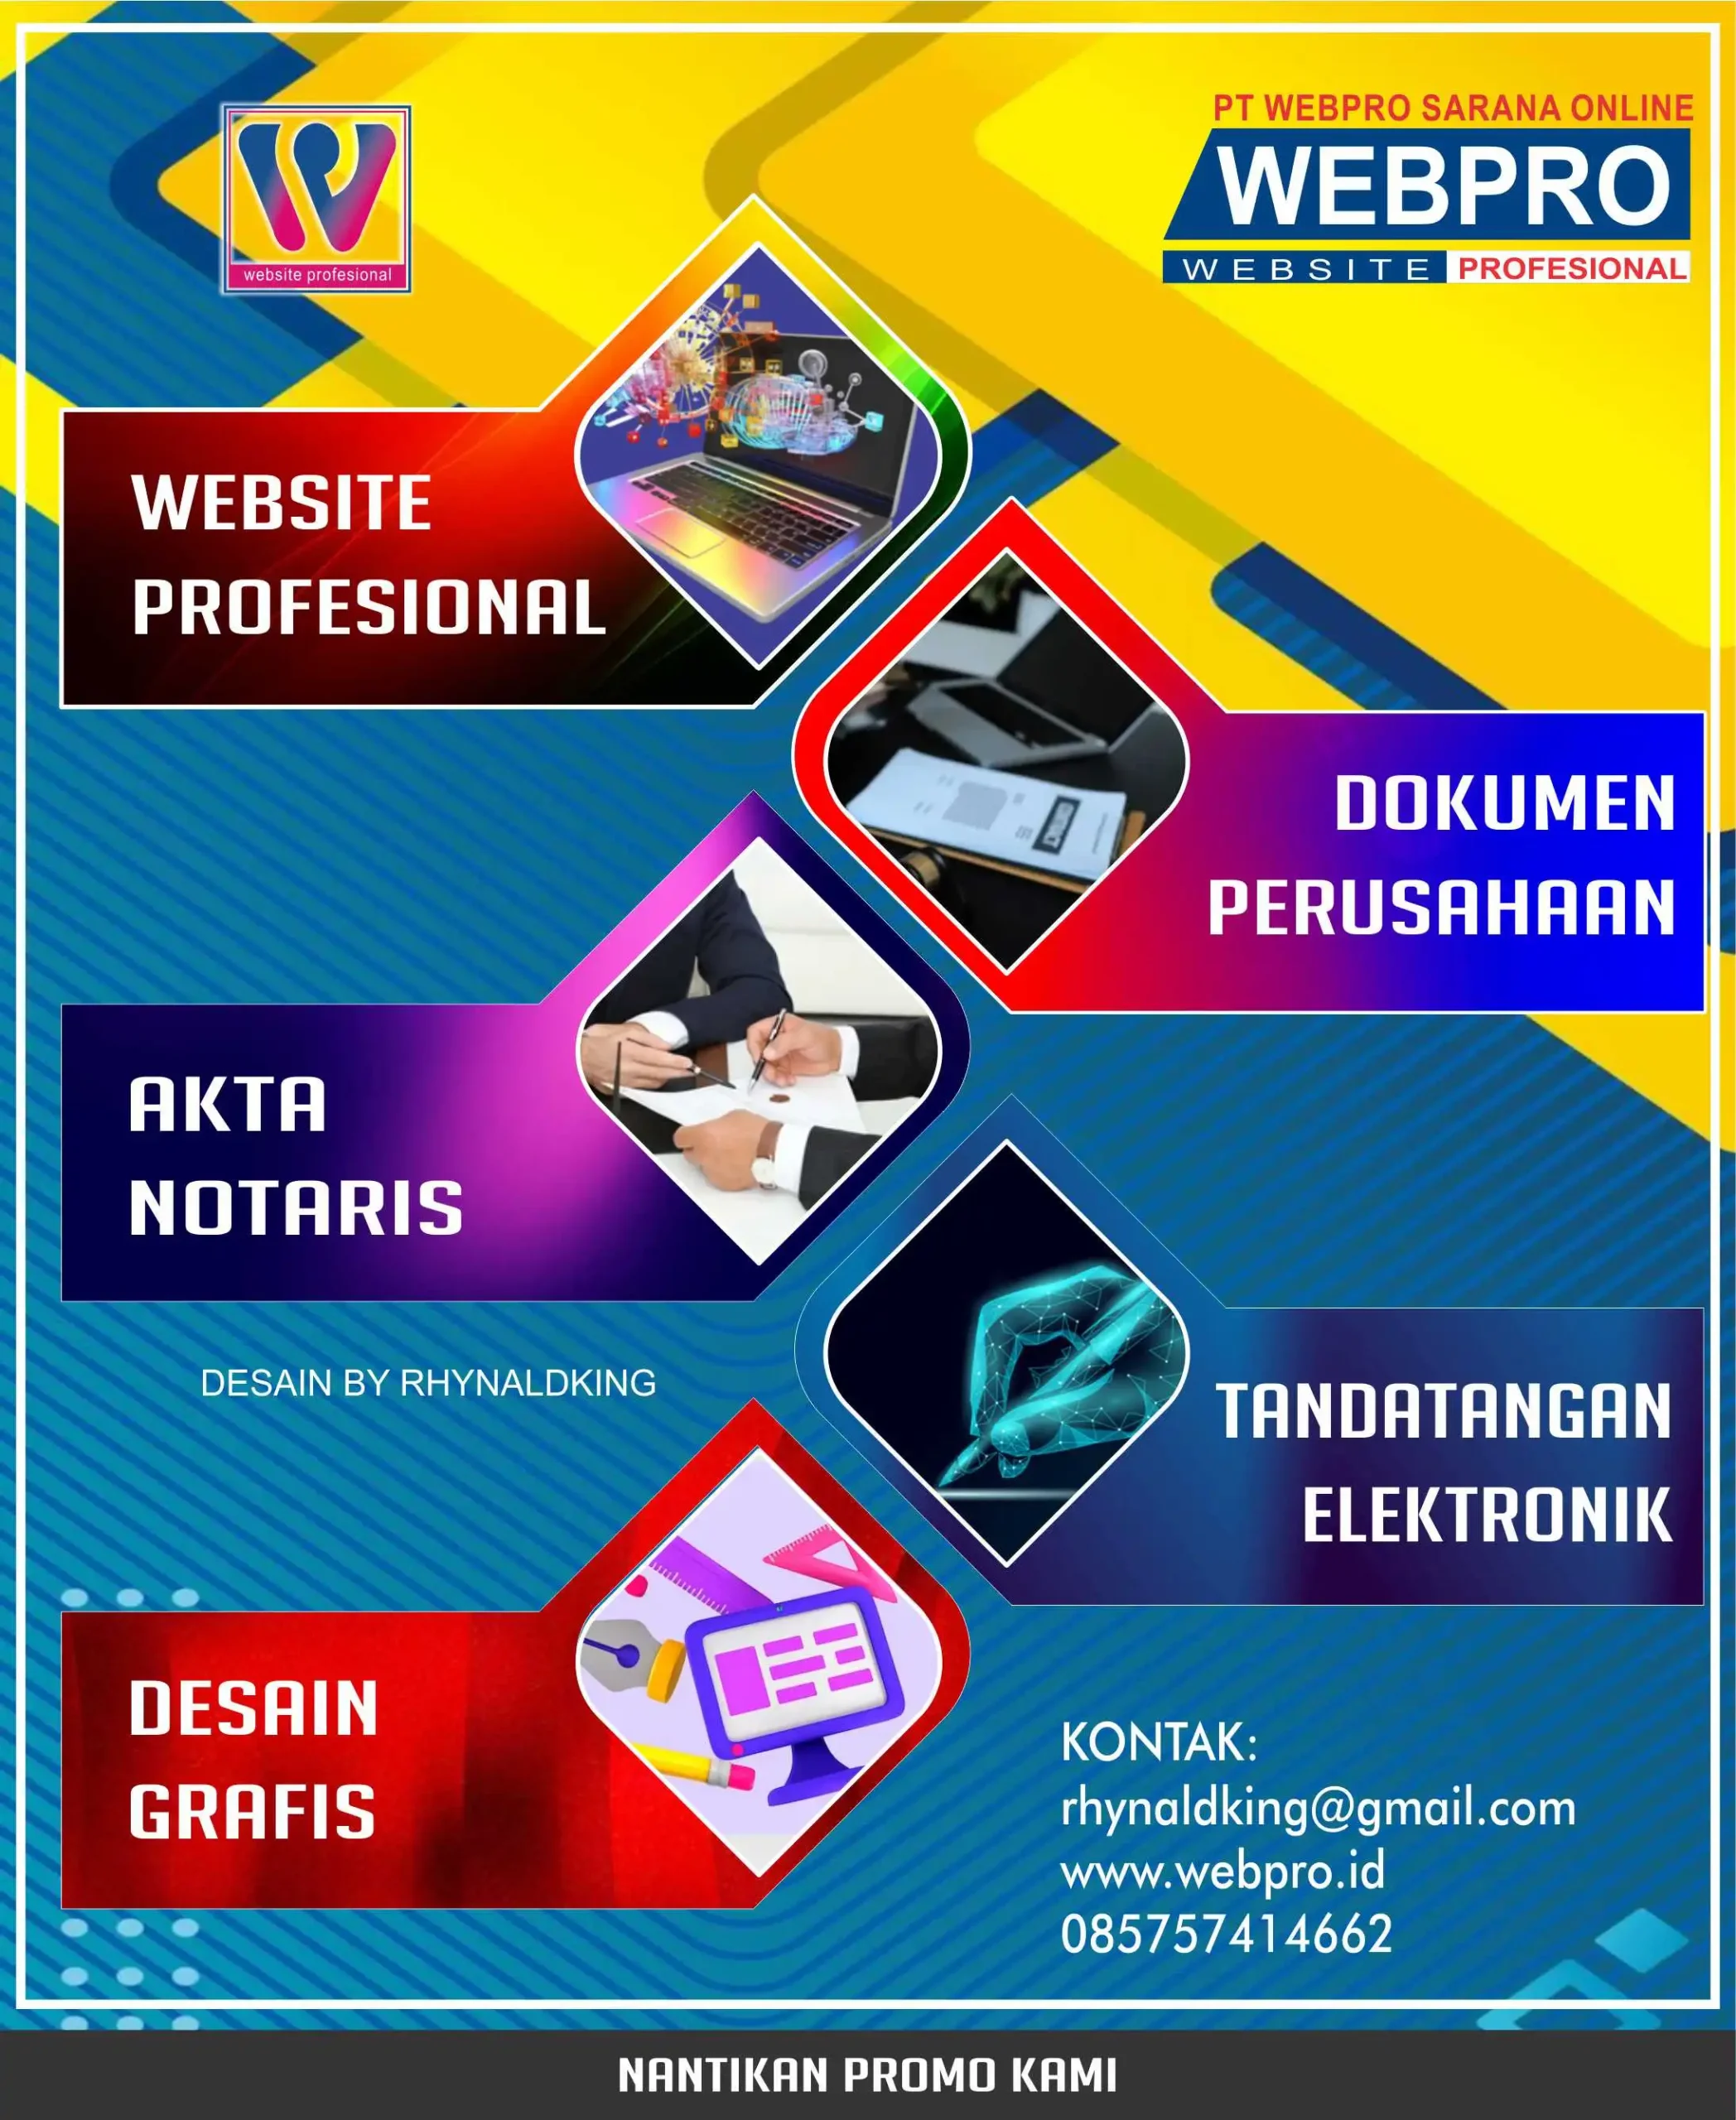 WebPro Website Profesional